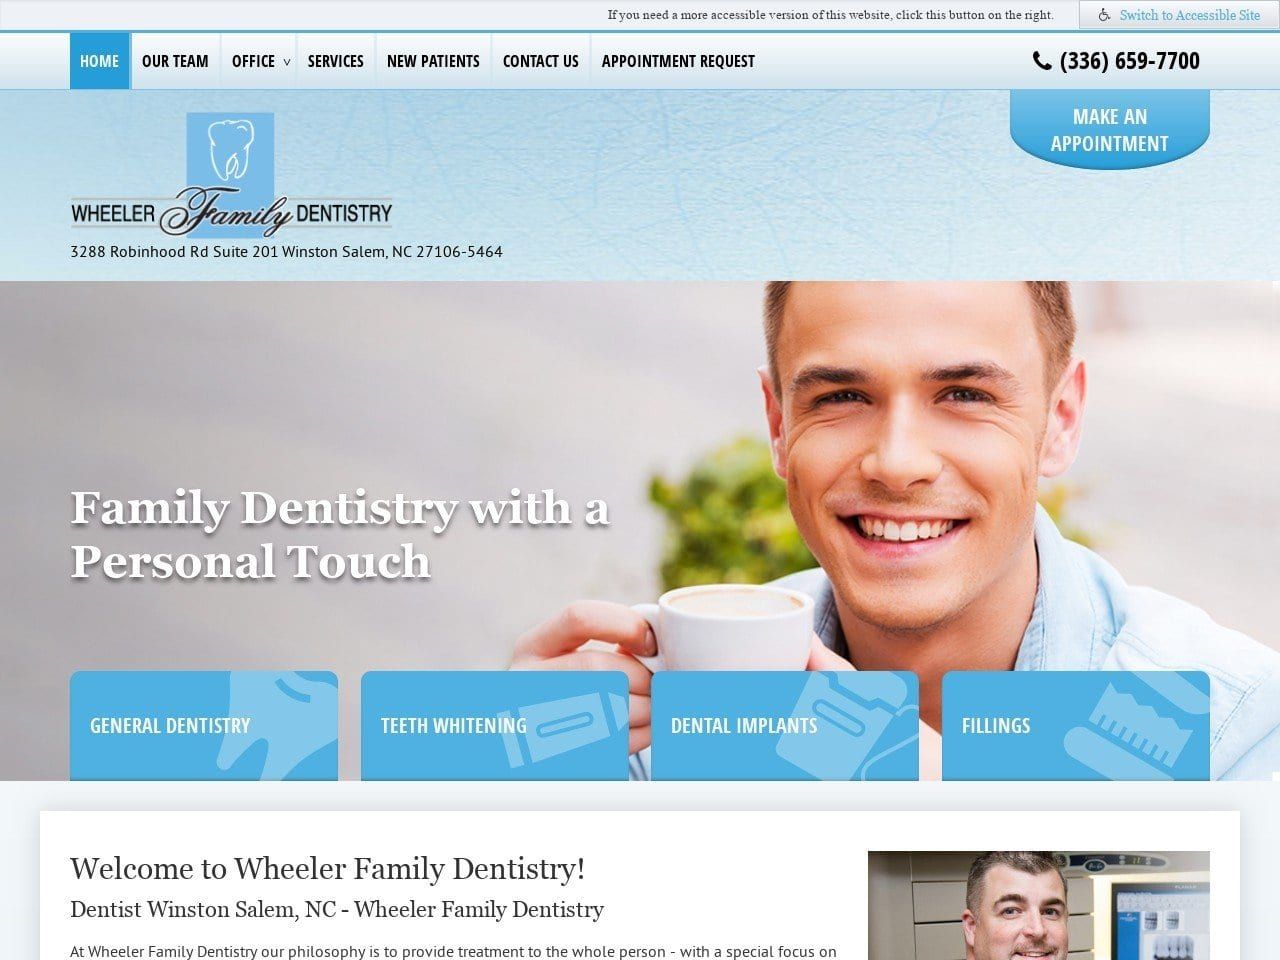 Wheeler Family Dentistry Website Screenshot from wheelersmiles.com